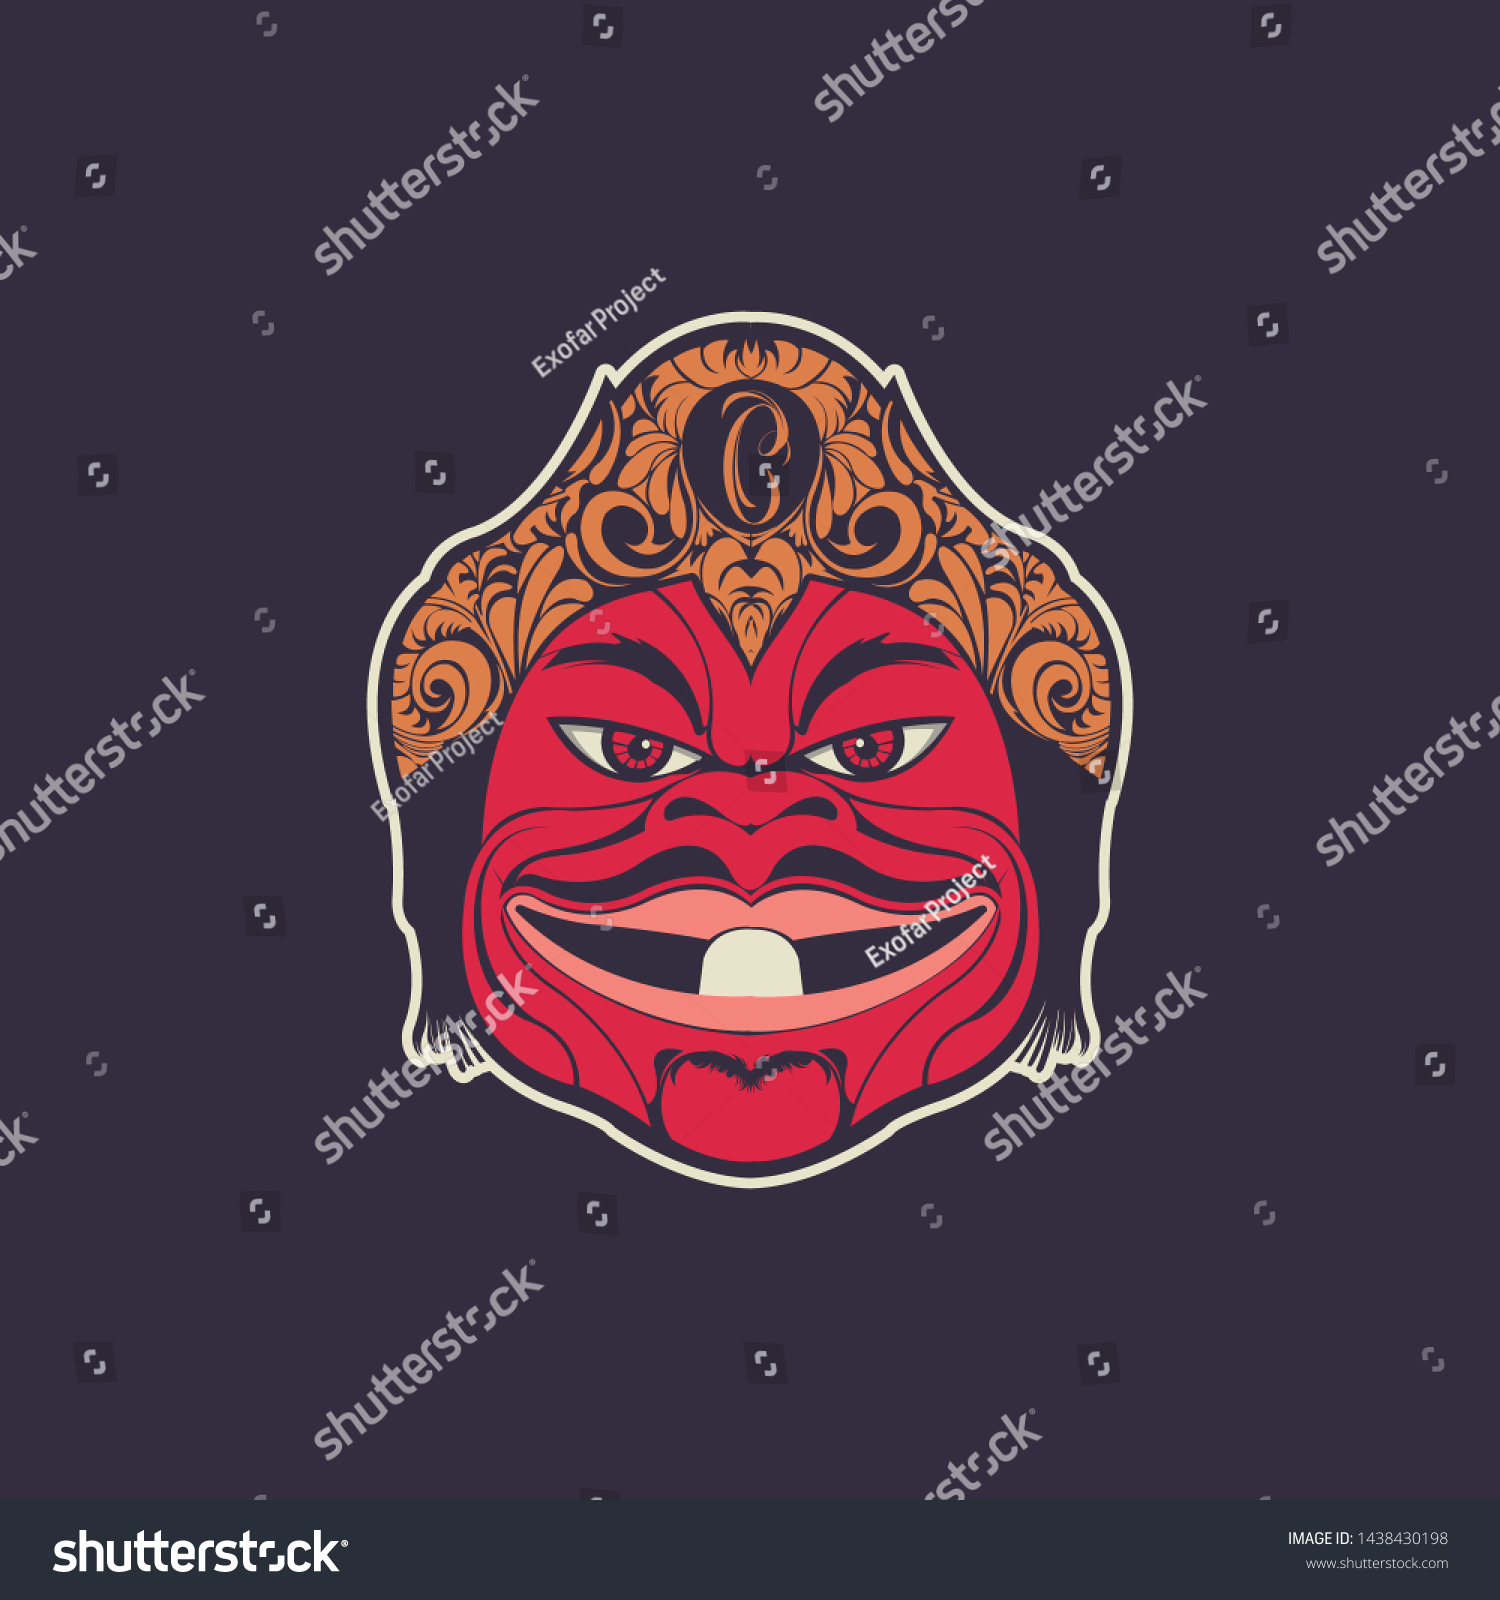 SVG of Cepot Indonesian puppet mascot vector for team, brand, esport logo or mural artwork, t-shirt desgin svg